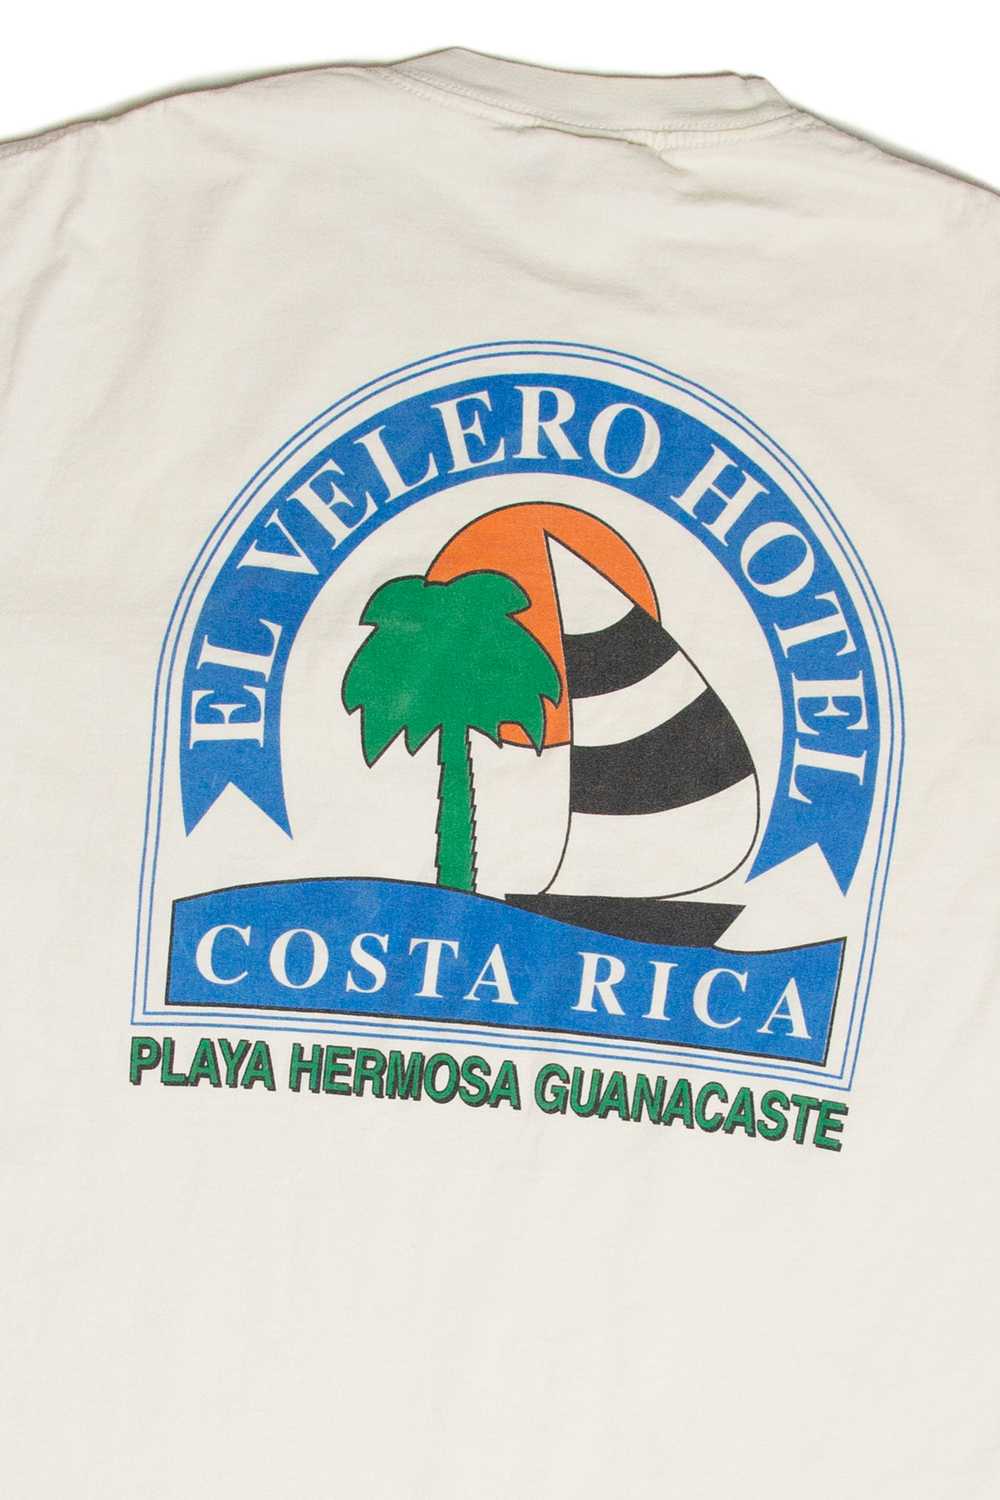 Vintage El Velero Hotel Costa Rica T-Shirt - image 8